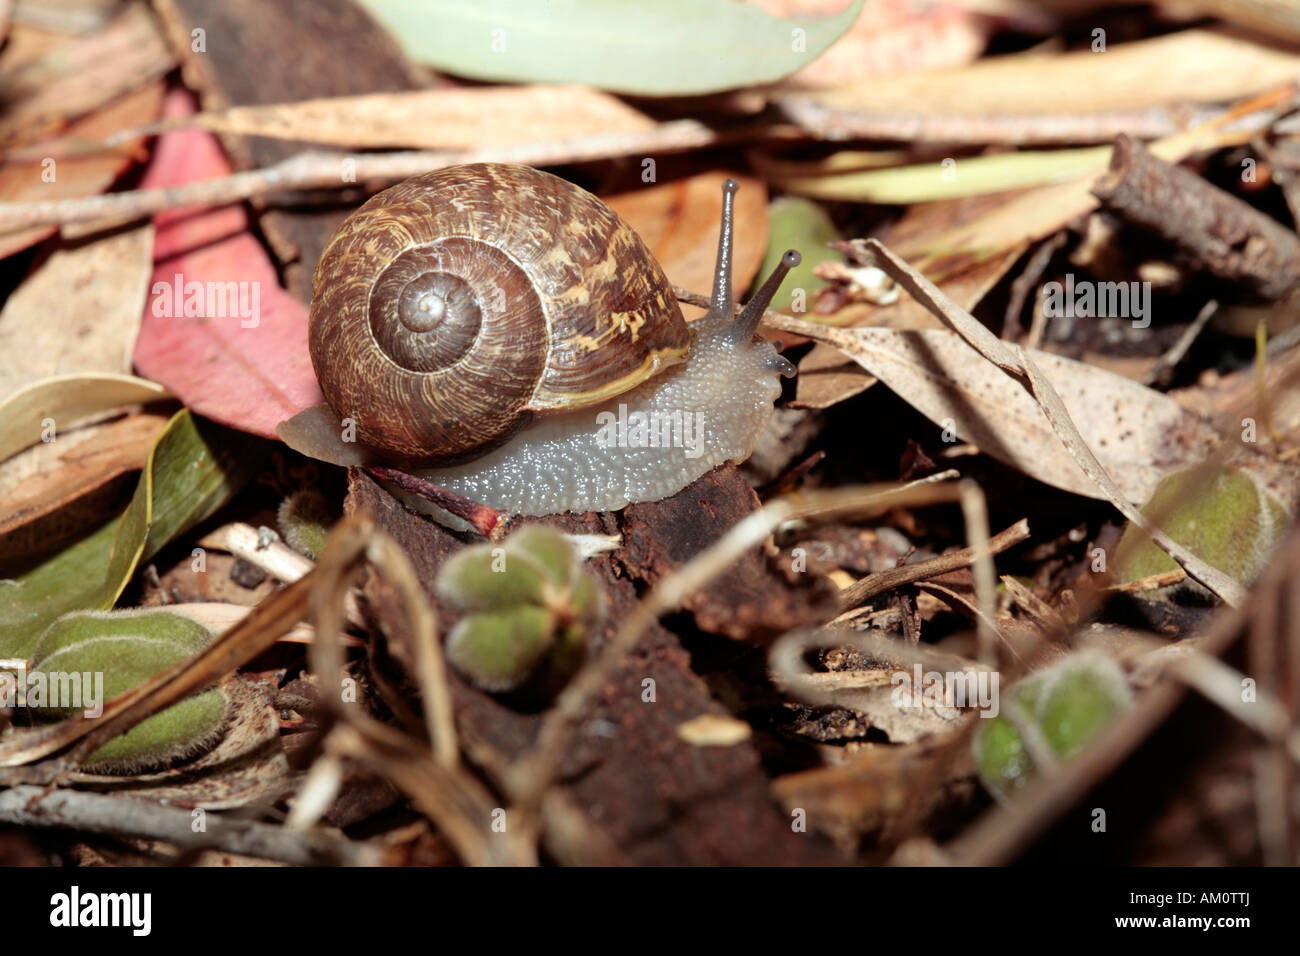 Brown Garden Snail / Gardensnail - Helix aspersa-Member of the Phylum Mollusca Class Gastropoda and Order Stylommatophora Stock Photo